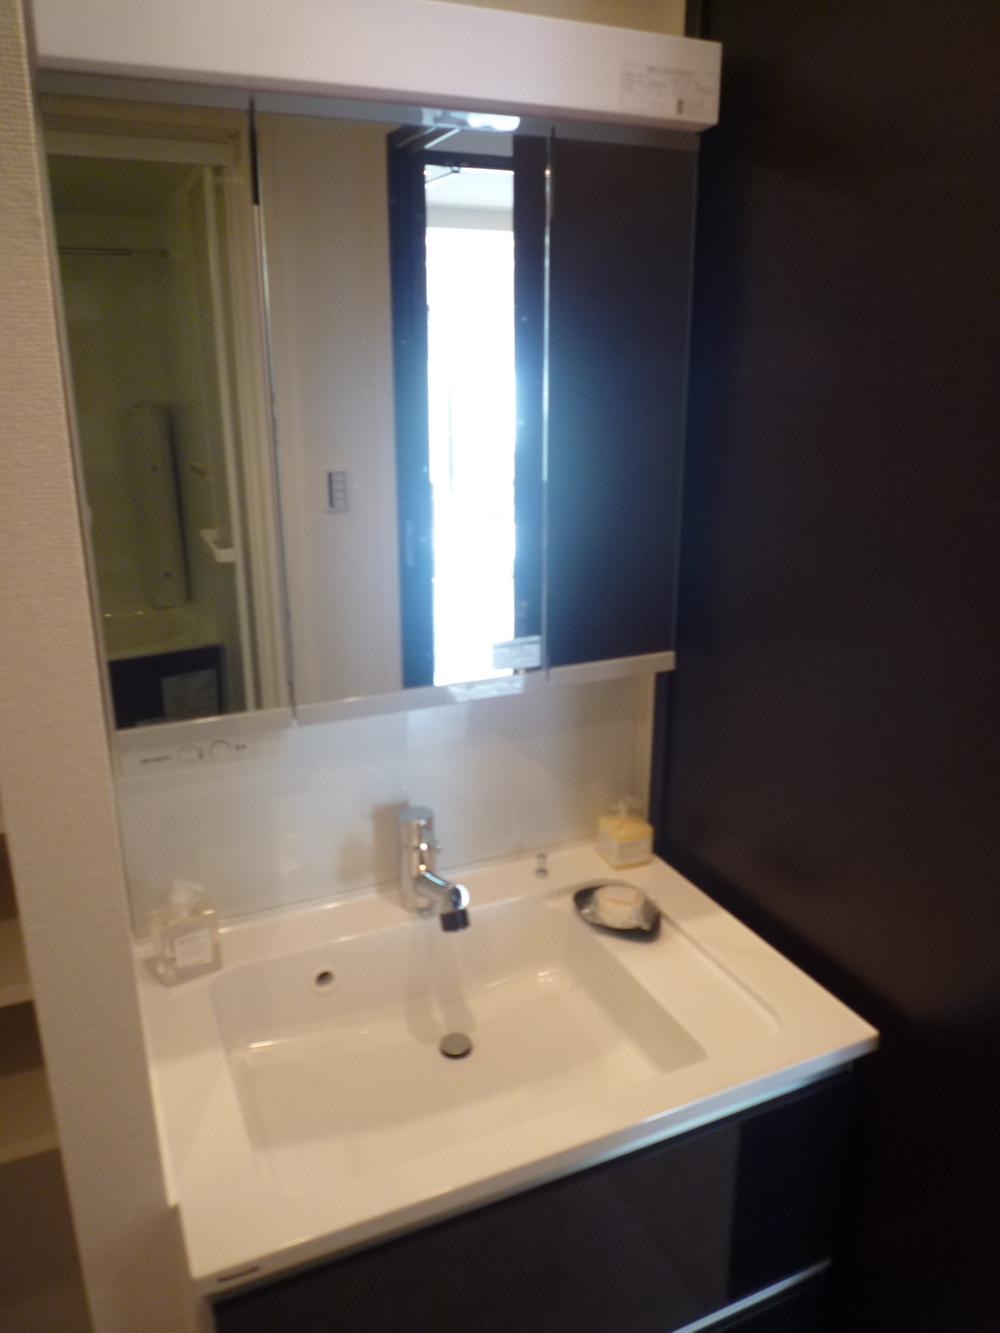 Wash basin, toilet. Shower, Three-sided mirror type